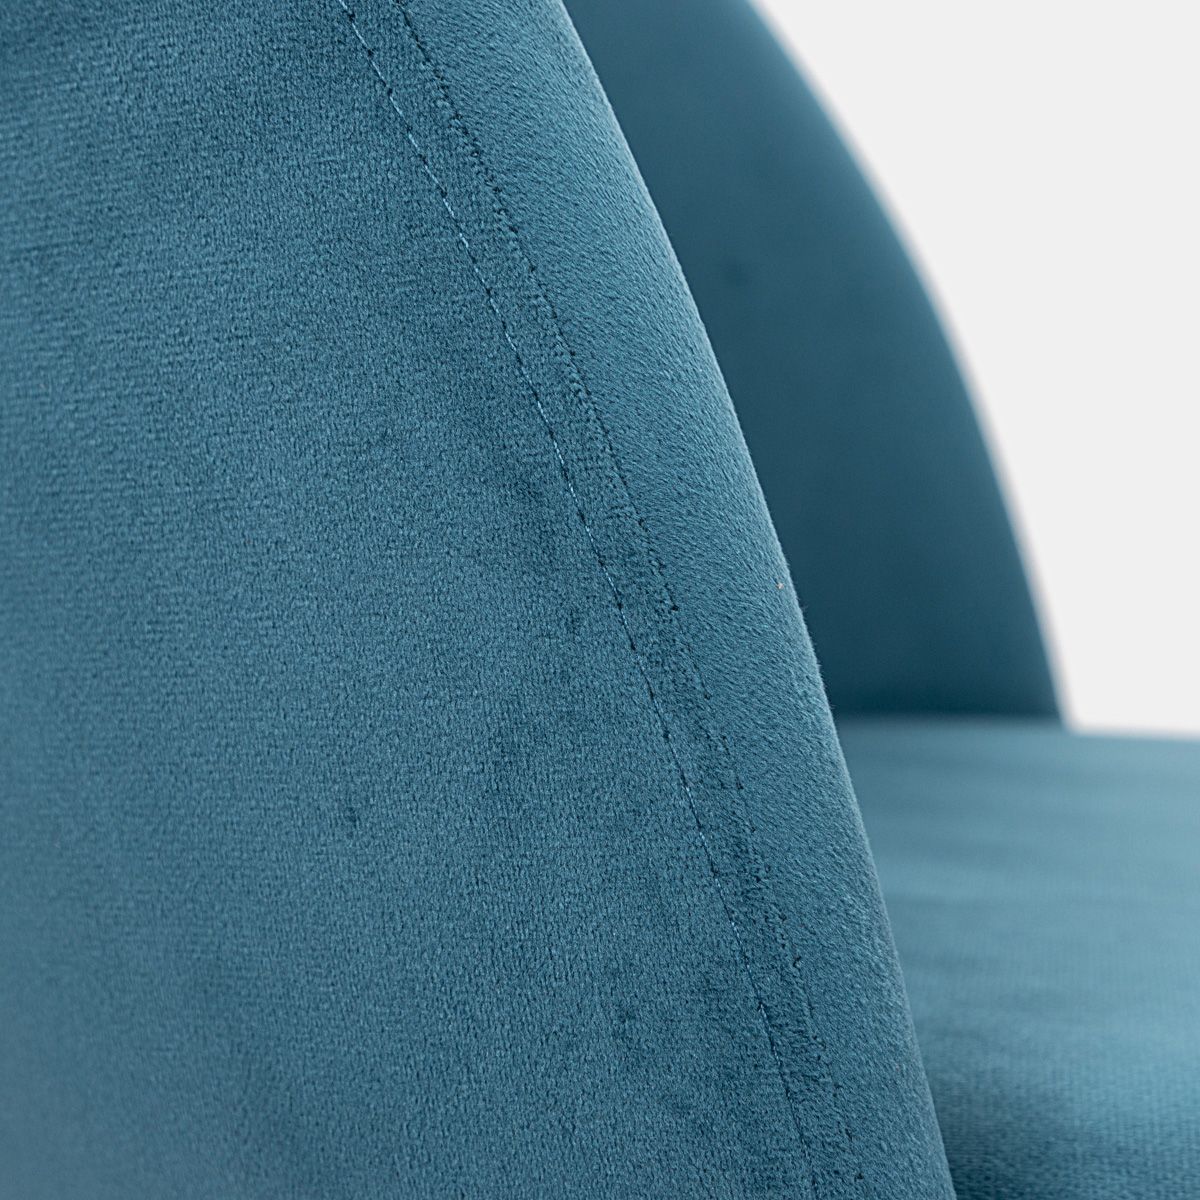 Set 2 sedie in velluto blu petrolio e gambe in metallo nero - Gilly